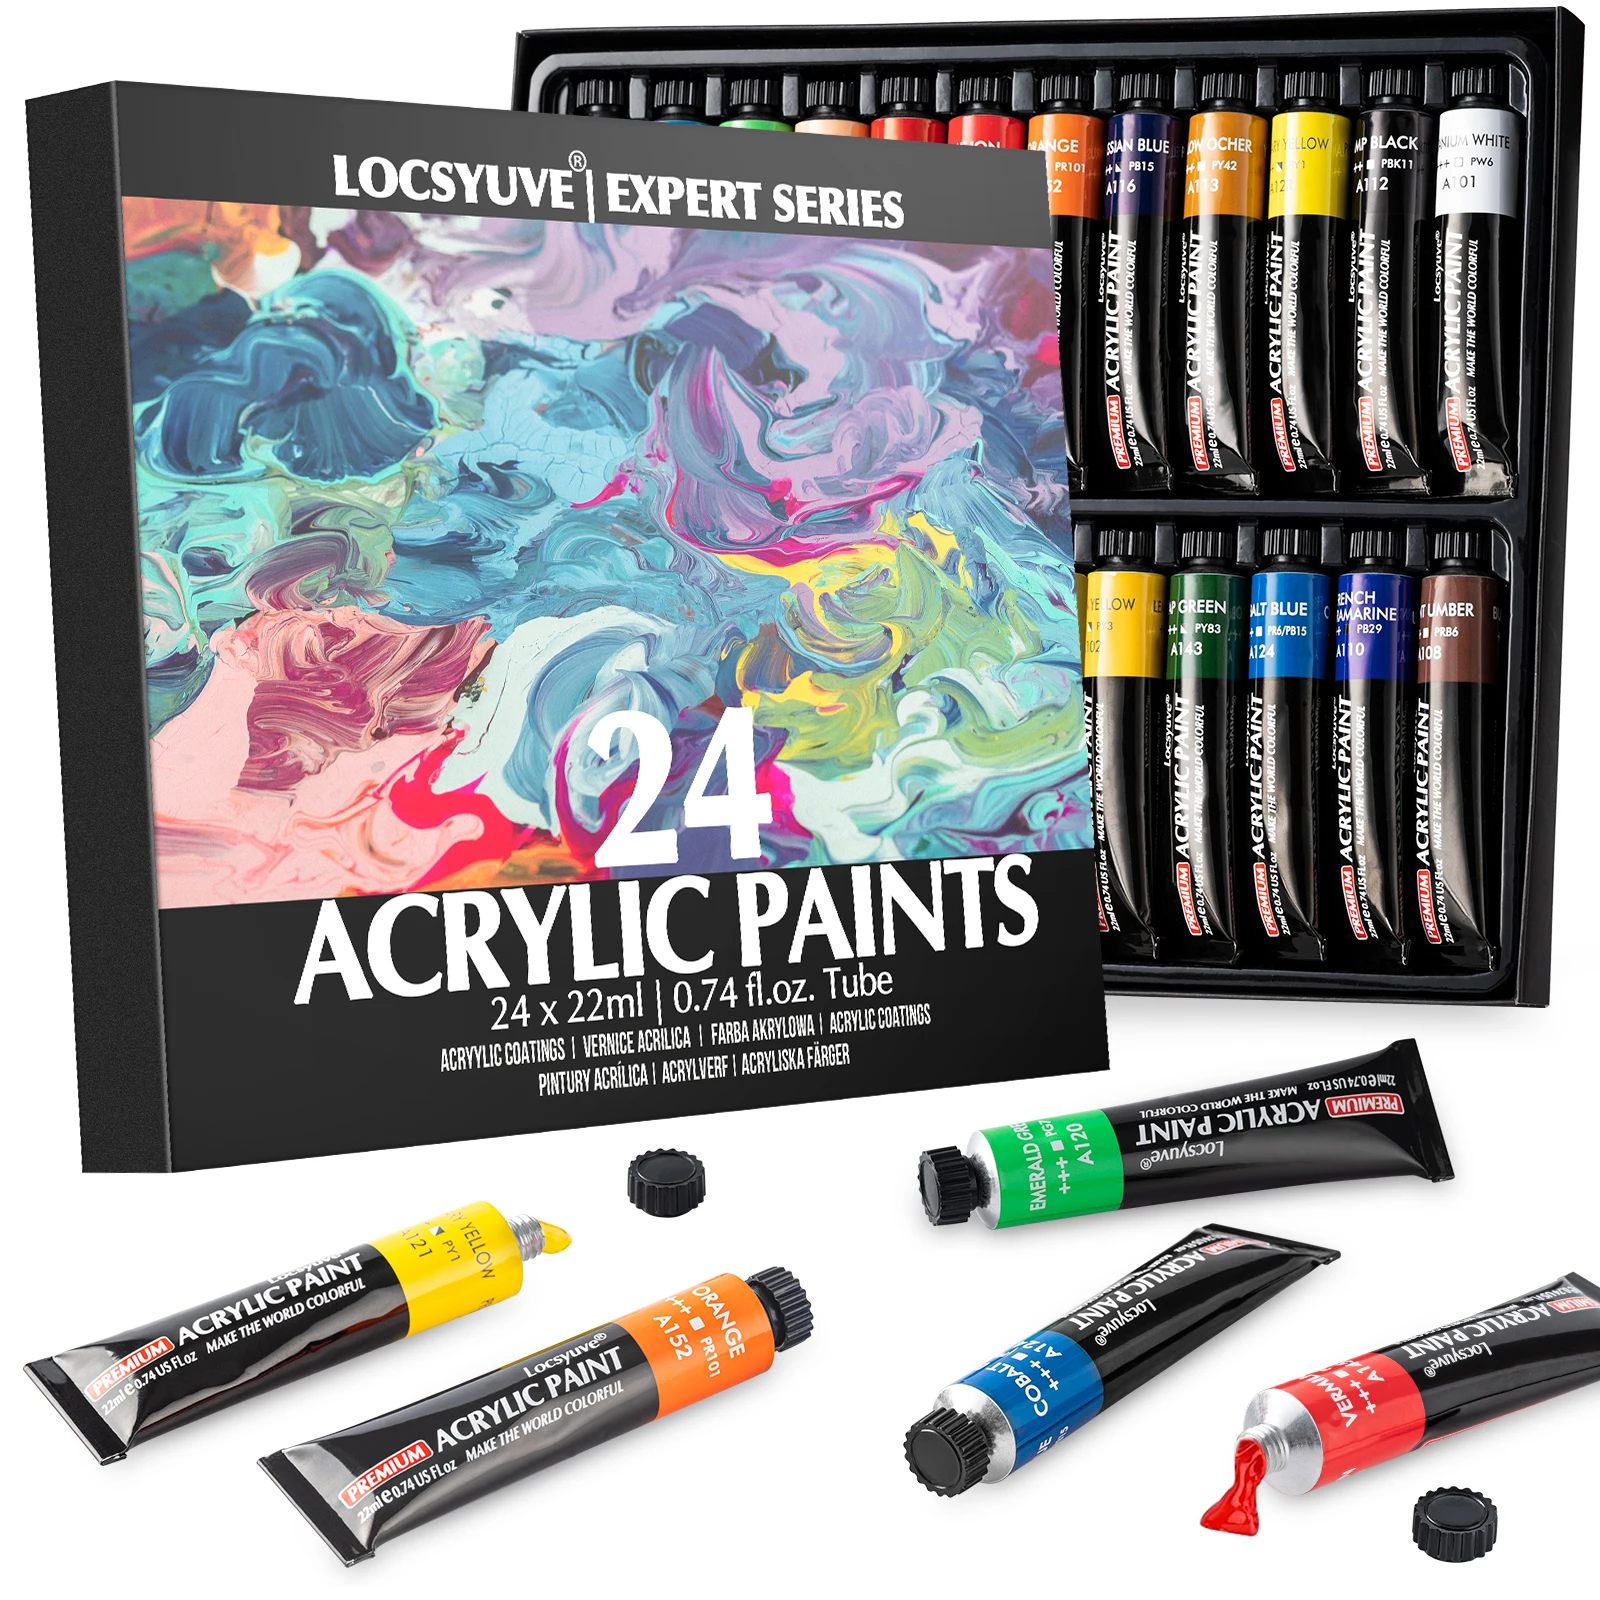 

Locsyuve Acrylic Paint 24 Colors 22ml(0.74 fl oz) Acrylic Paint Set, Paint for Fabric, Clothing, Rich Pigments for Artists